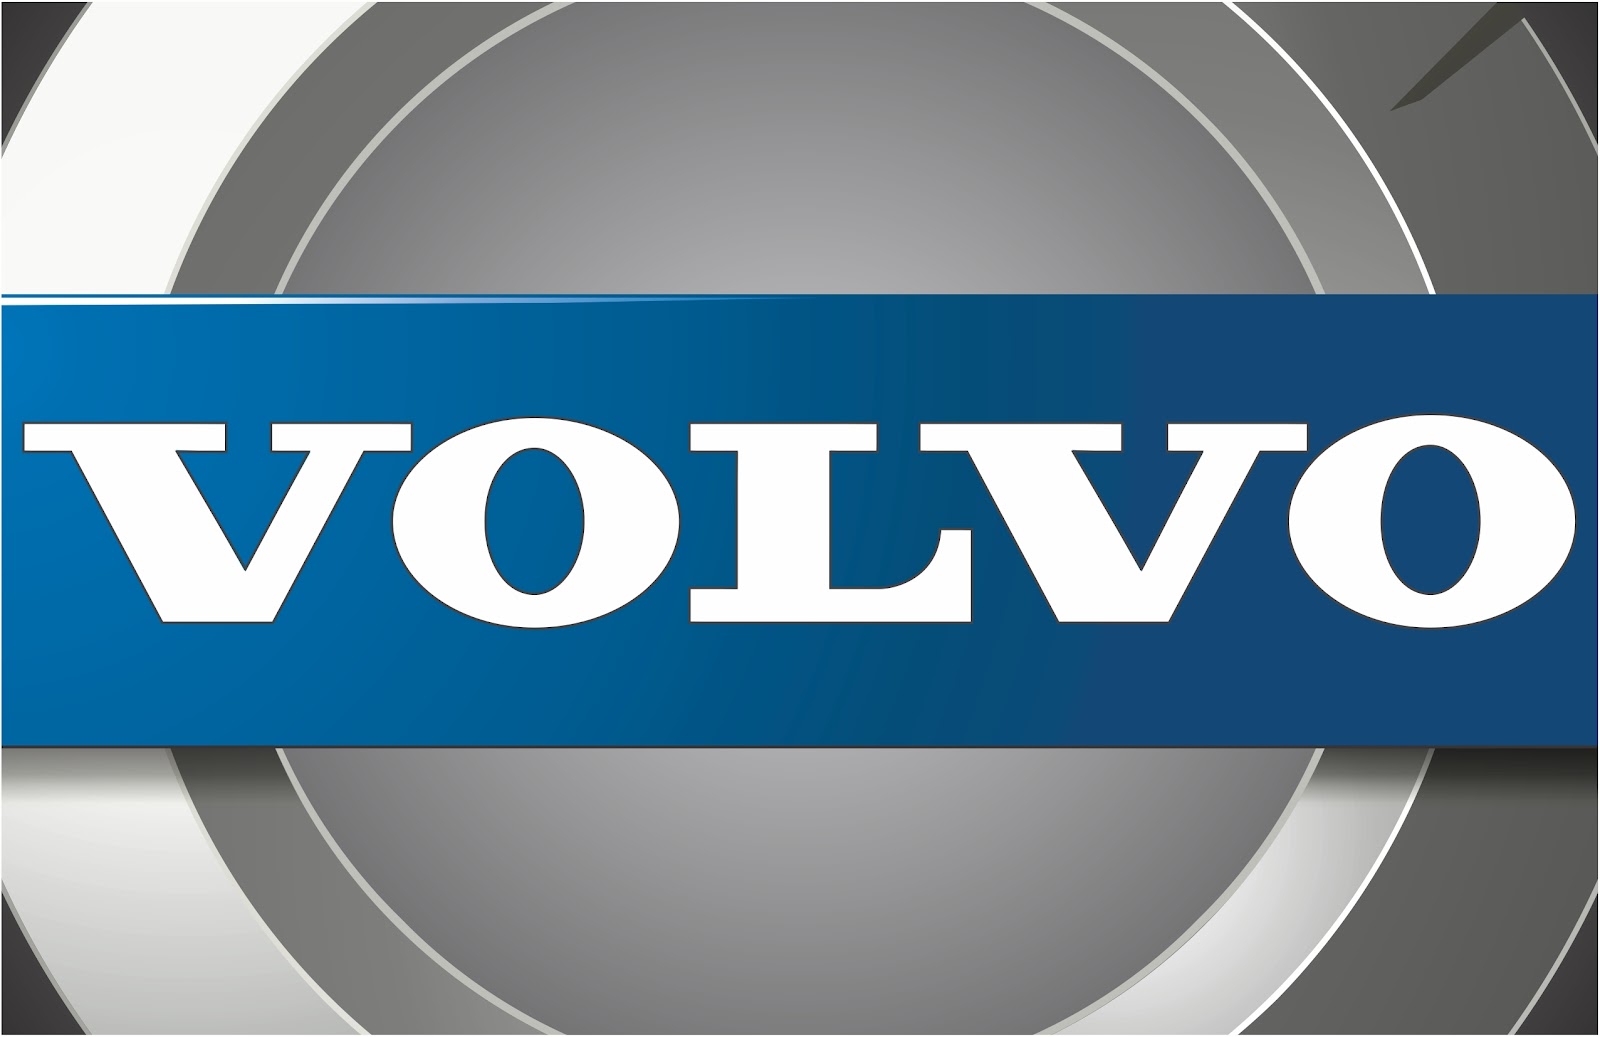 volvo logo wallpaper,product,logo,text,font,transport